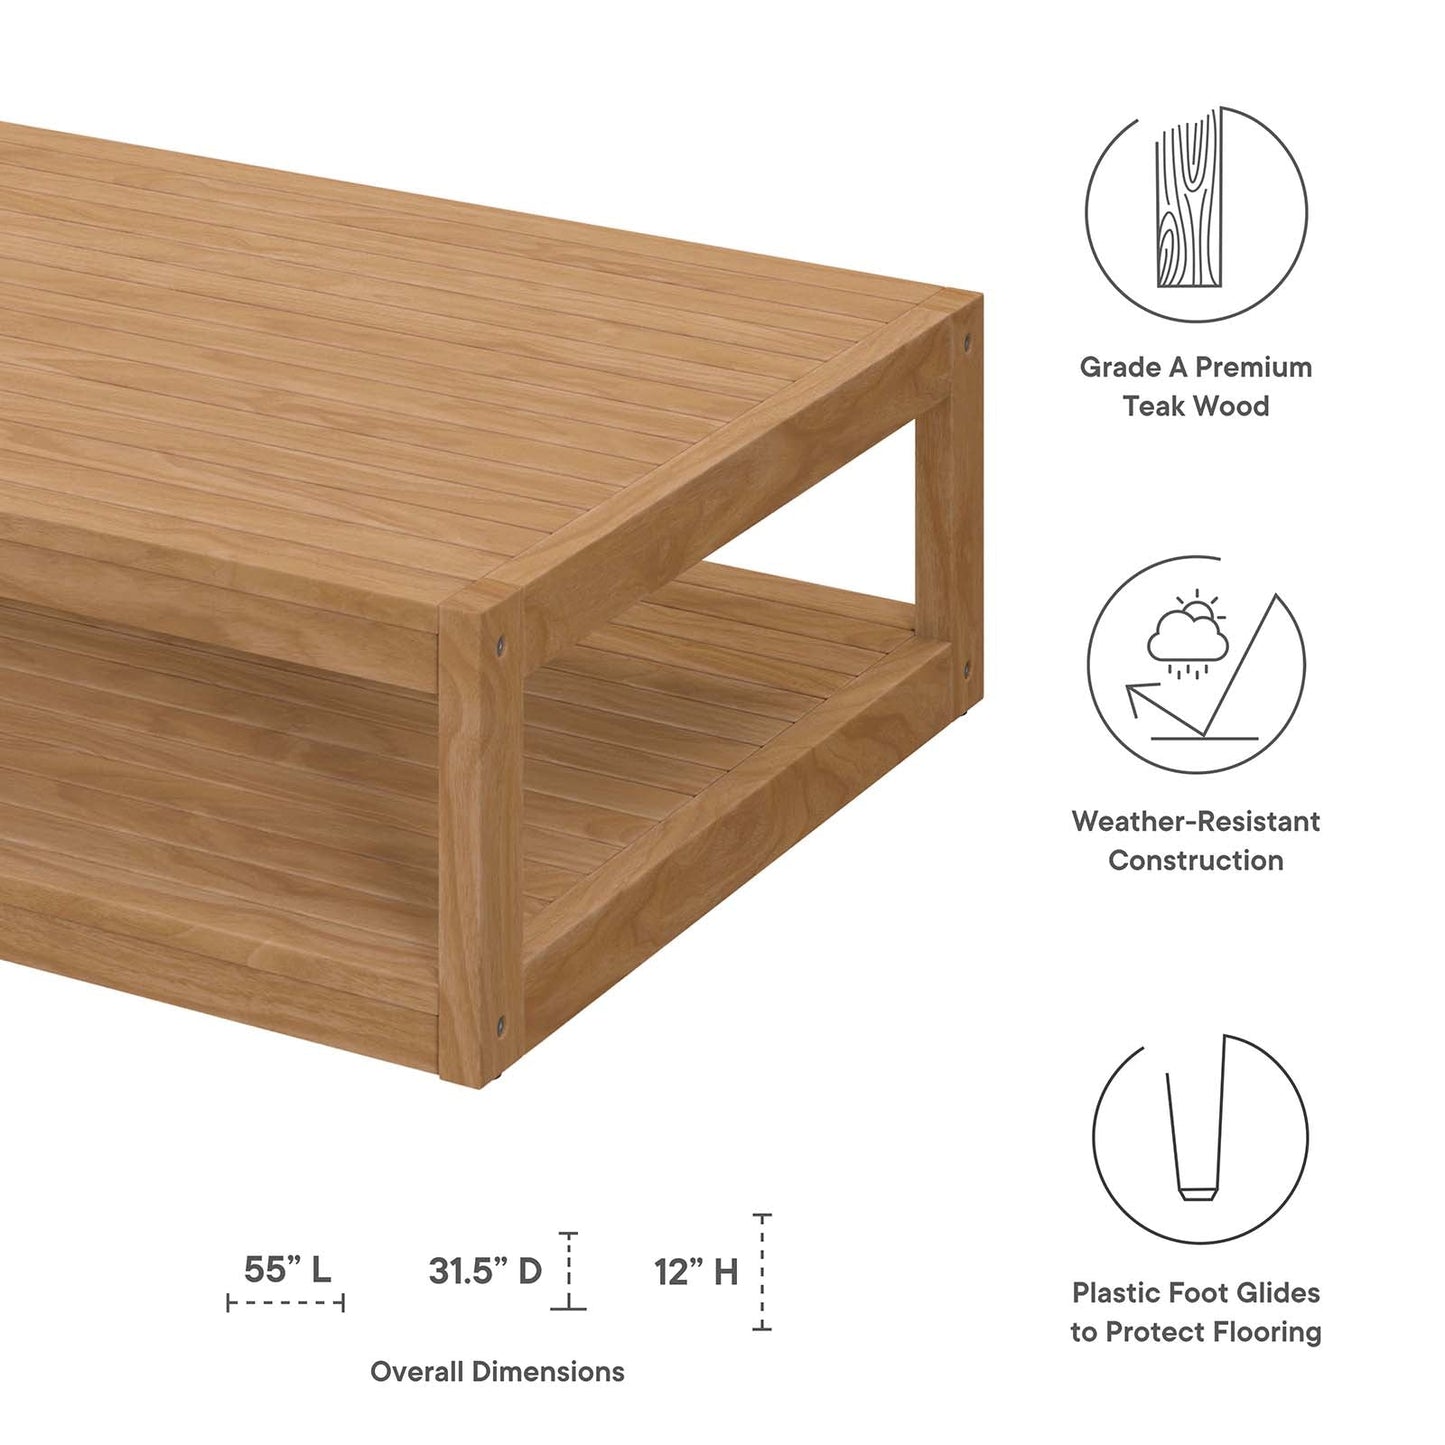 Carri Teak Wood Outdoor Patio Coffee Table